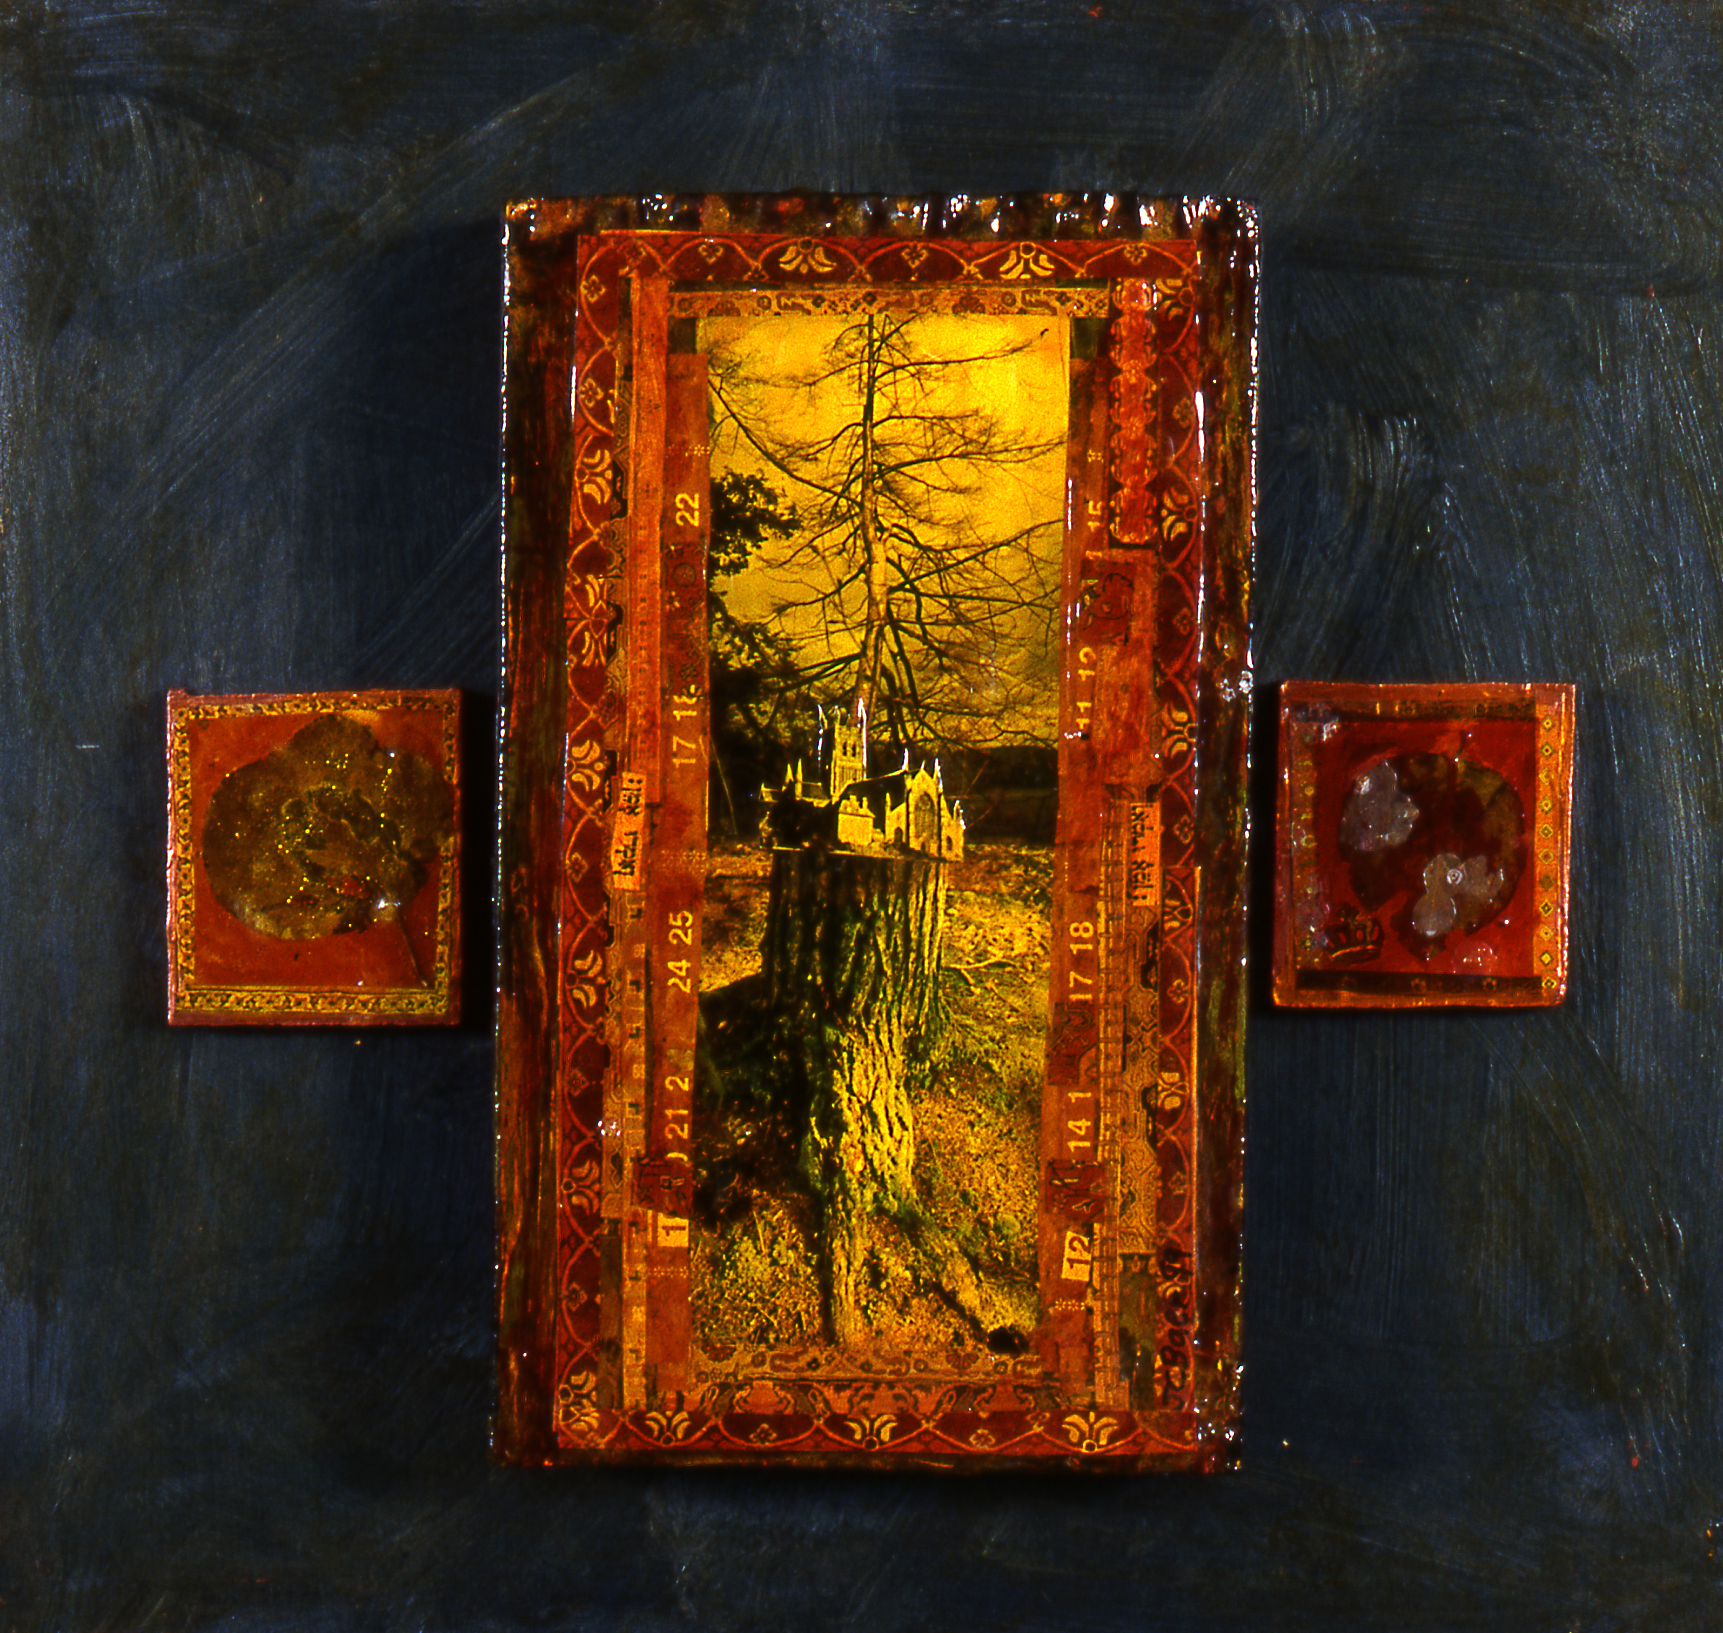 Tree amulet, 1999, Collage mixed media on wood panel, $500